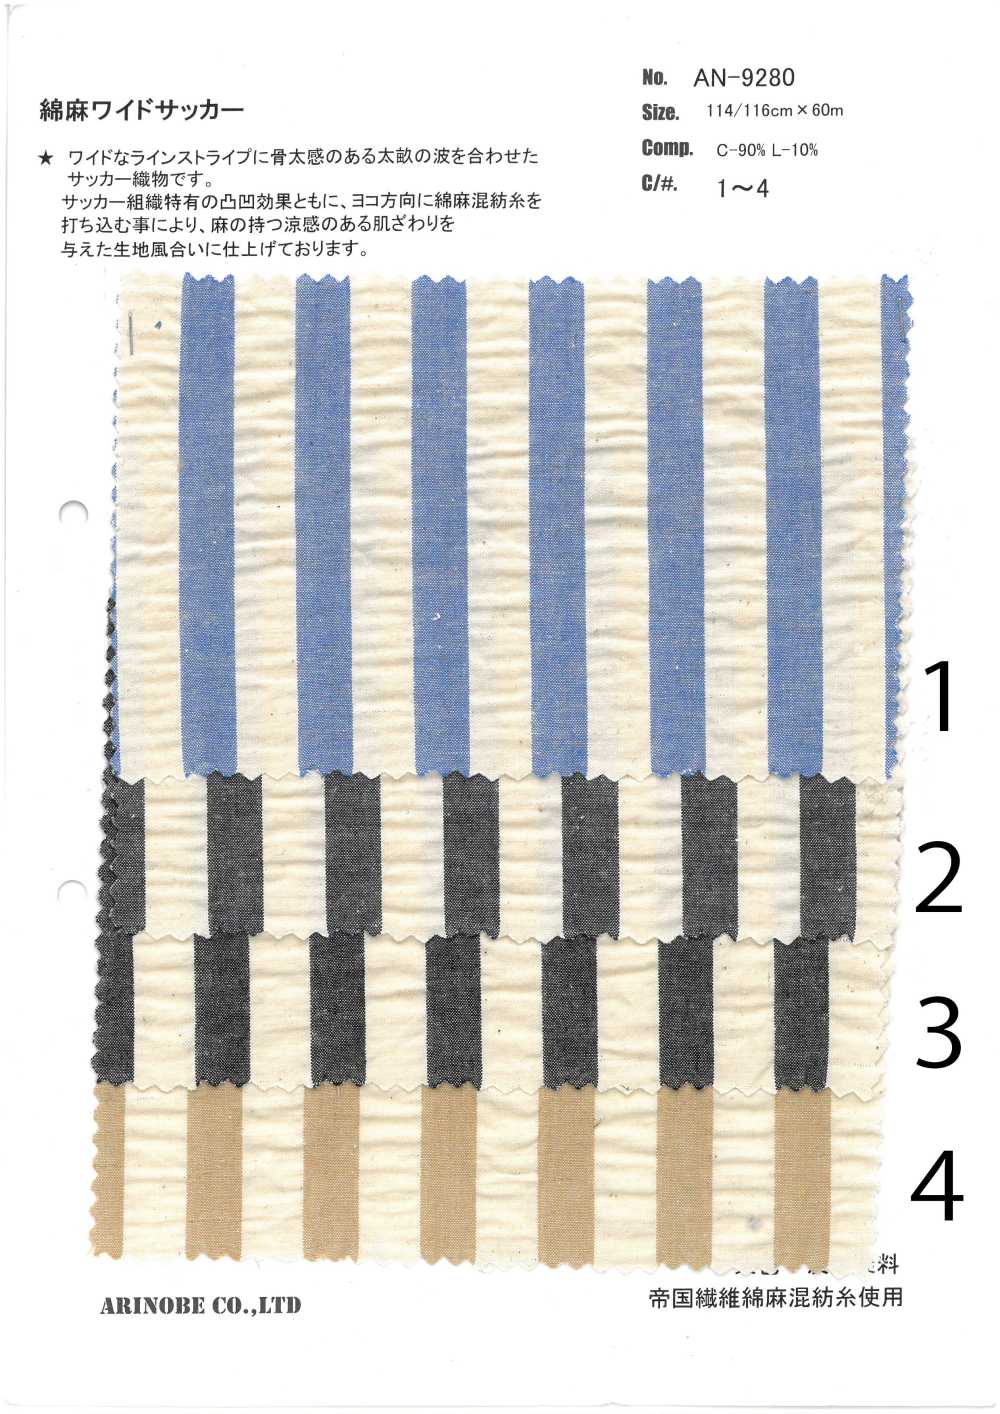 AN-9280 Lin Seersucker Rayures[Fabrication De Textile] ARINOBE CO., LTD.